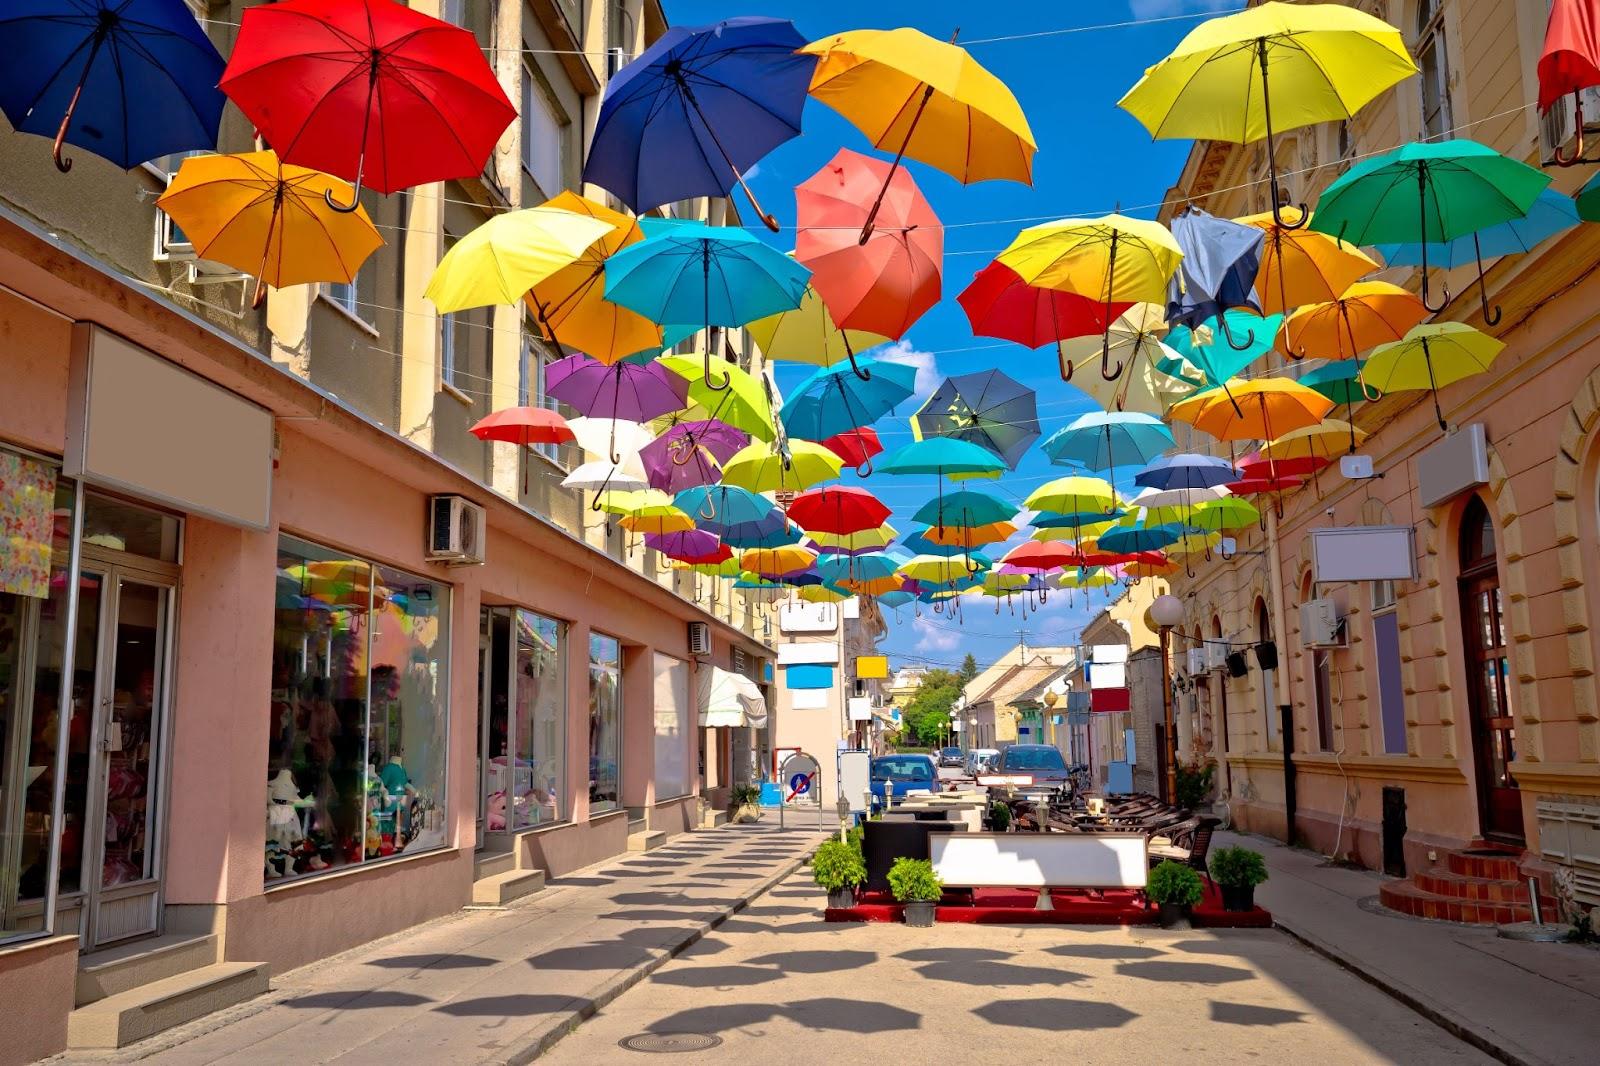 Town of Sombor colorful umbrella street, Vojvodina region of Serbia